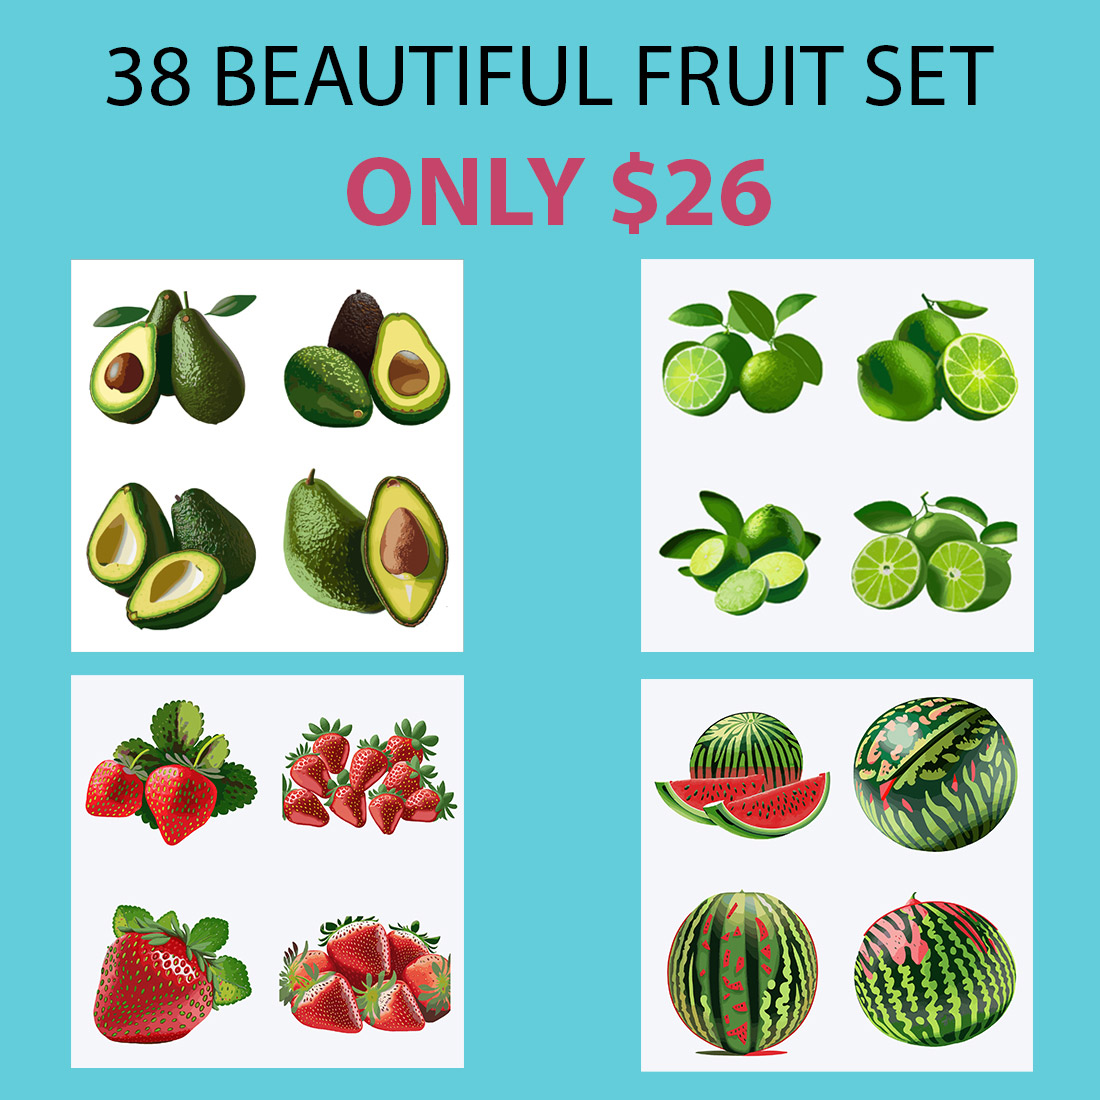 38 BEAUTIFUL FRUIT SET BUNDLE ONLY $26 cover image.